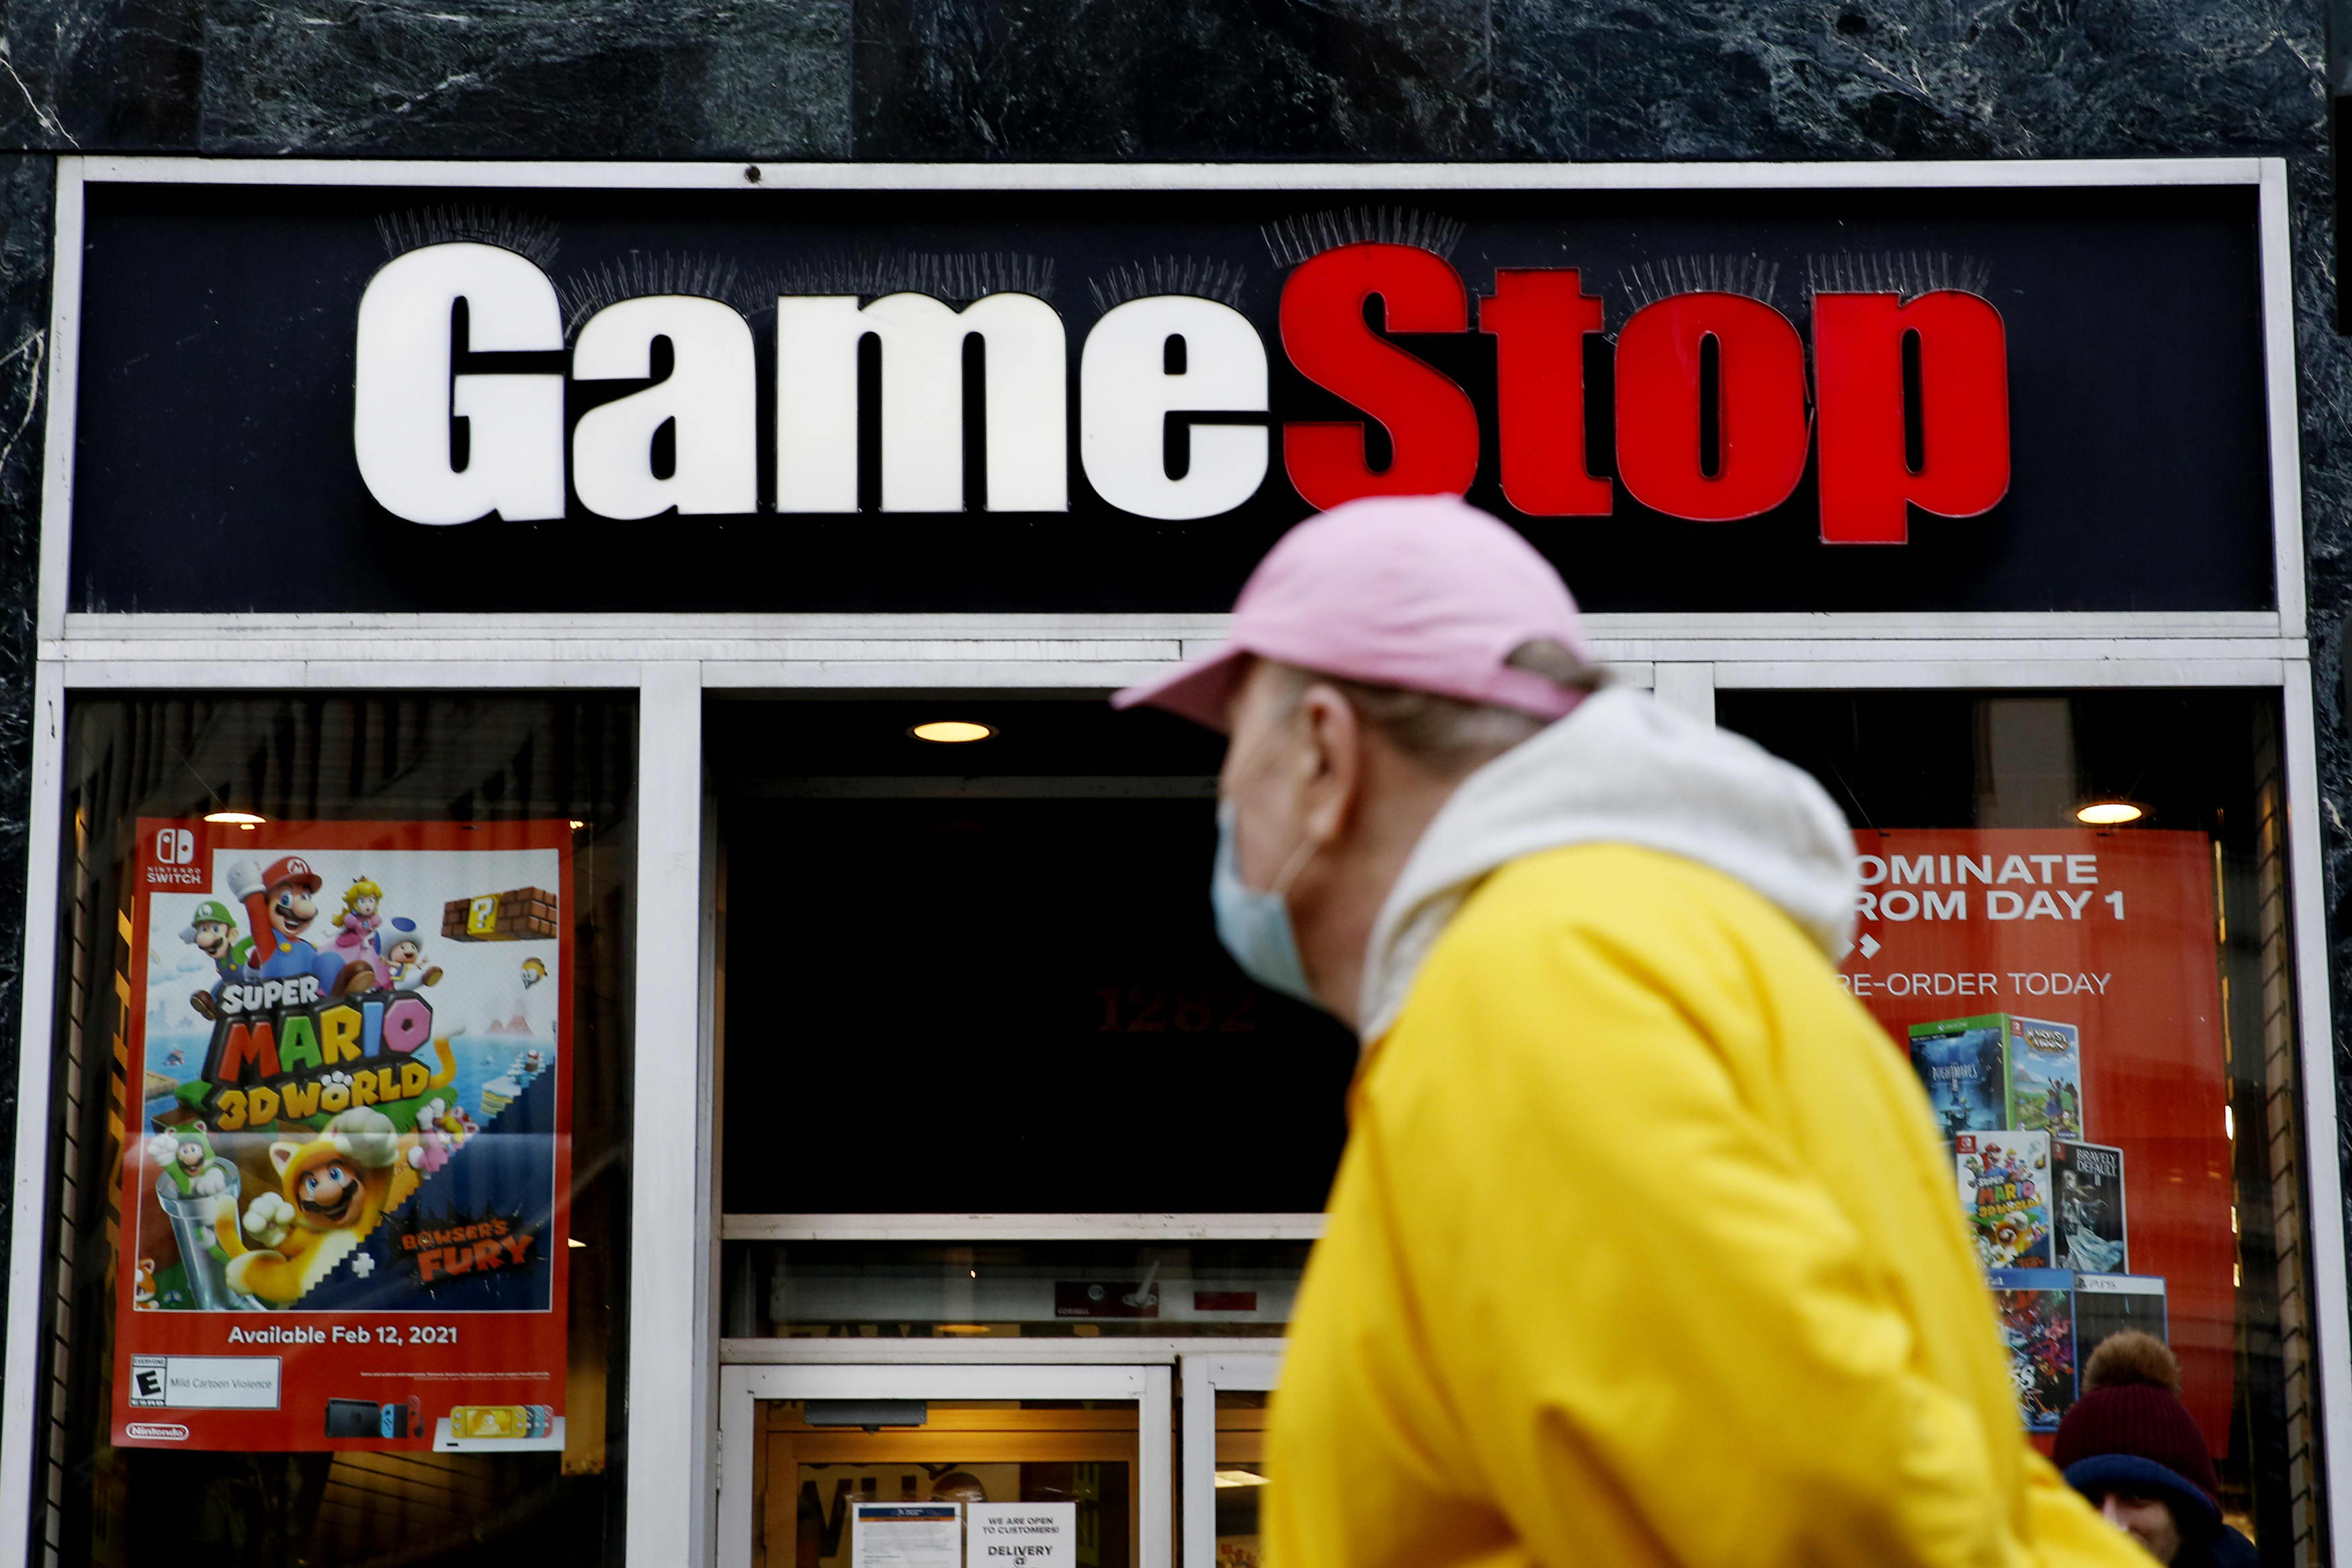 GameStop shares jump after the Reddit favorite raises $551 million in stock sales